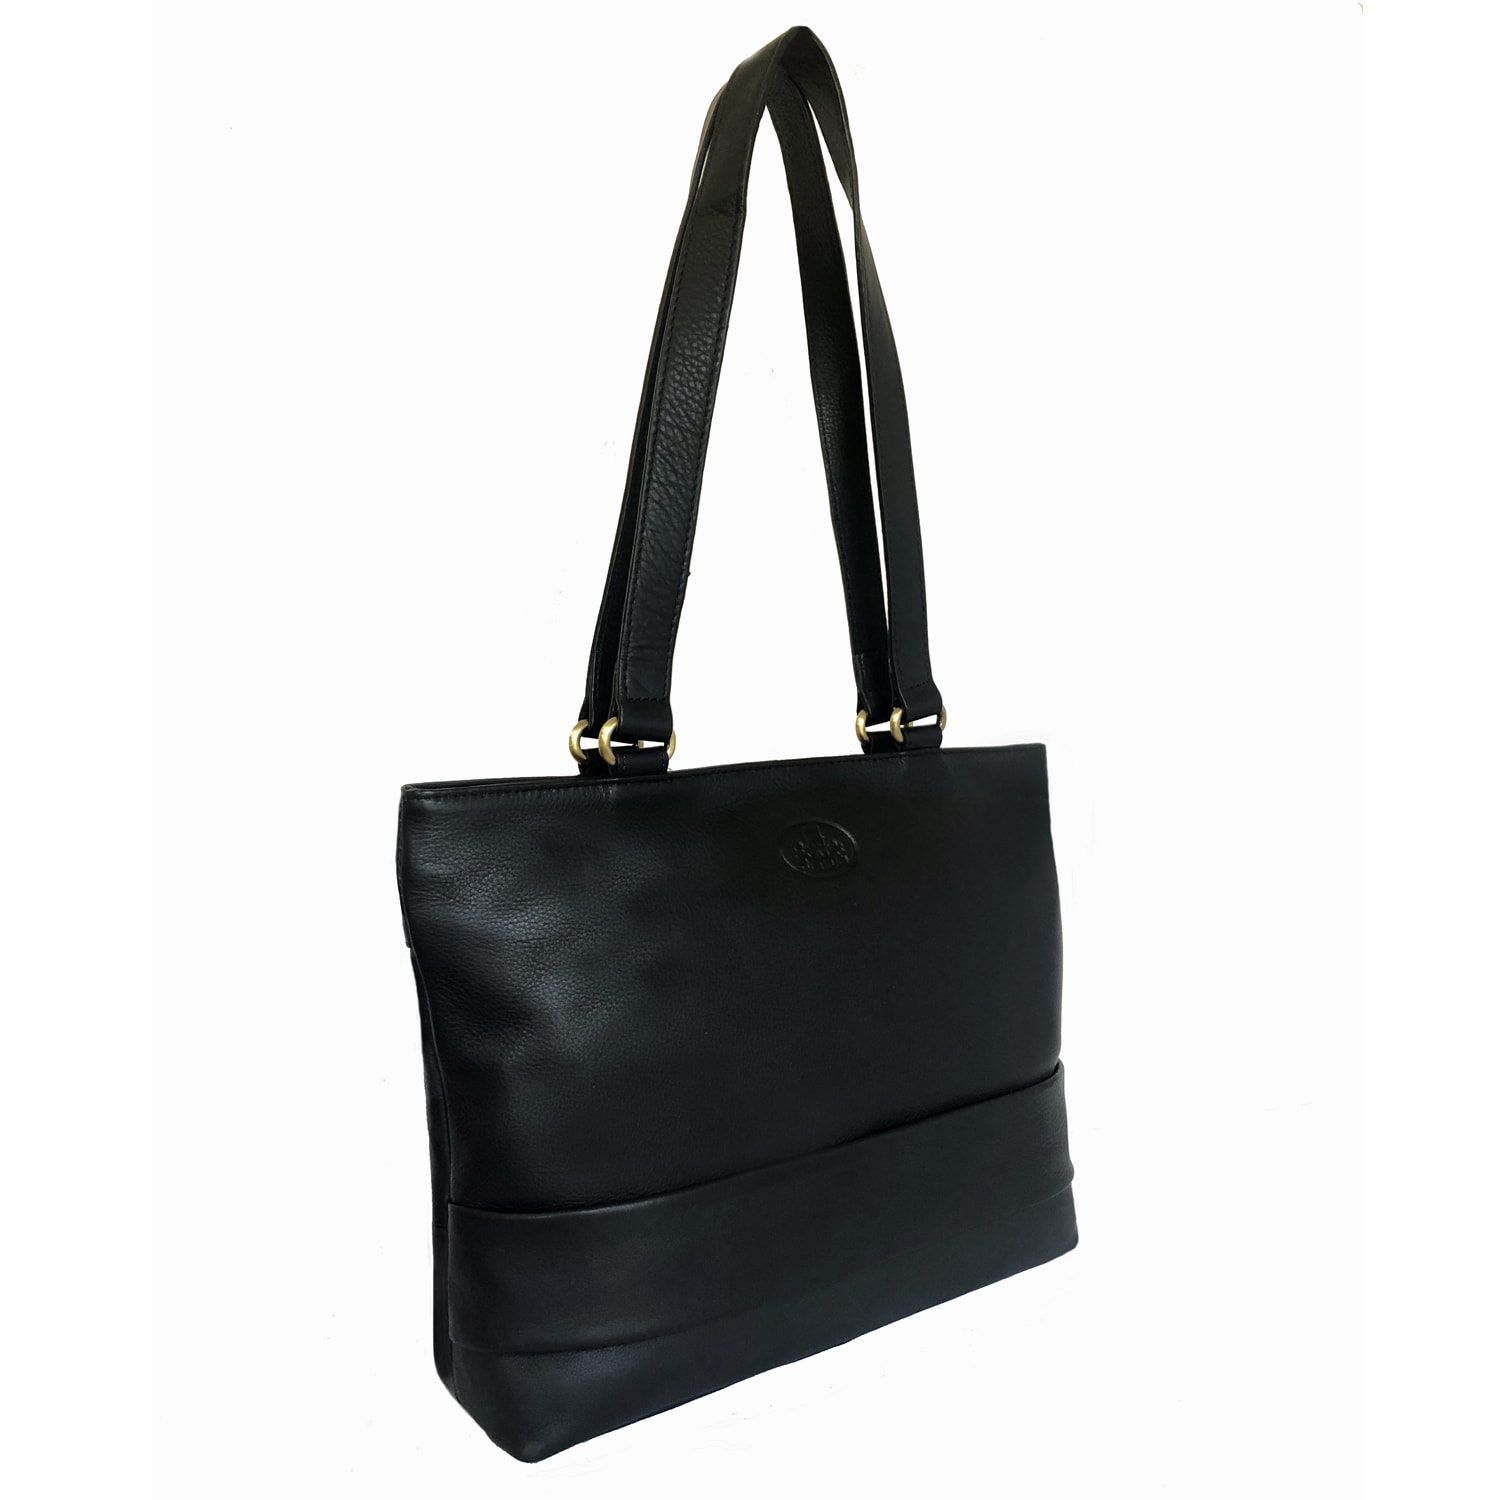 Rowallan Soft Black Leather Shoulder Bag, Handbag, Tote Bag